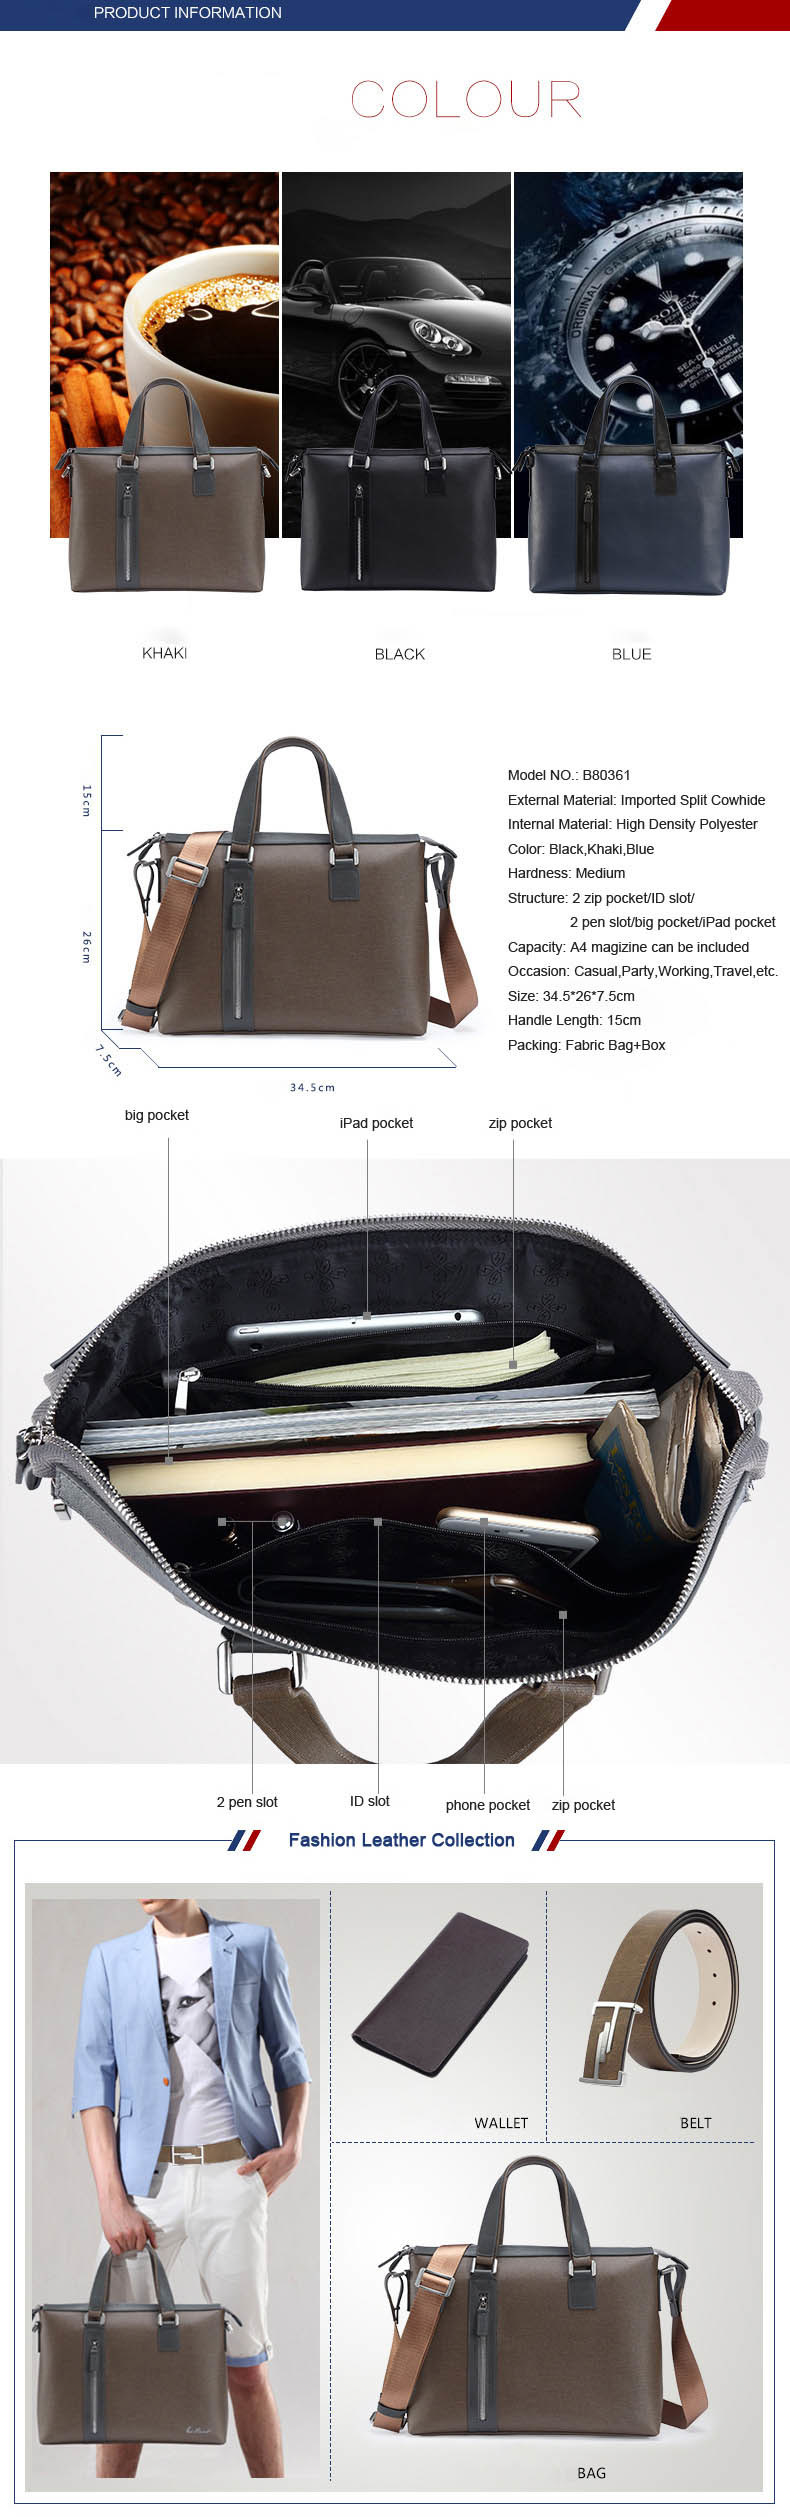 Guangzhou Leather Co Ltd Supply Genuine Designer Leather Brand Handbags